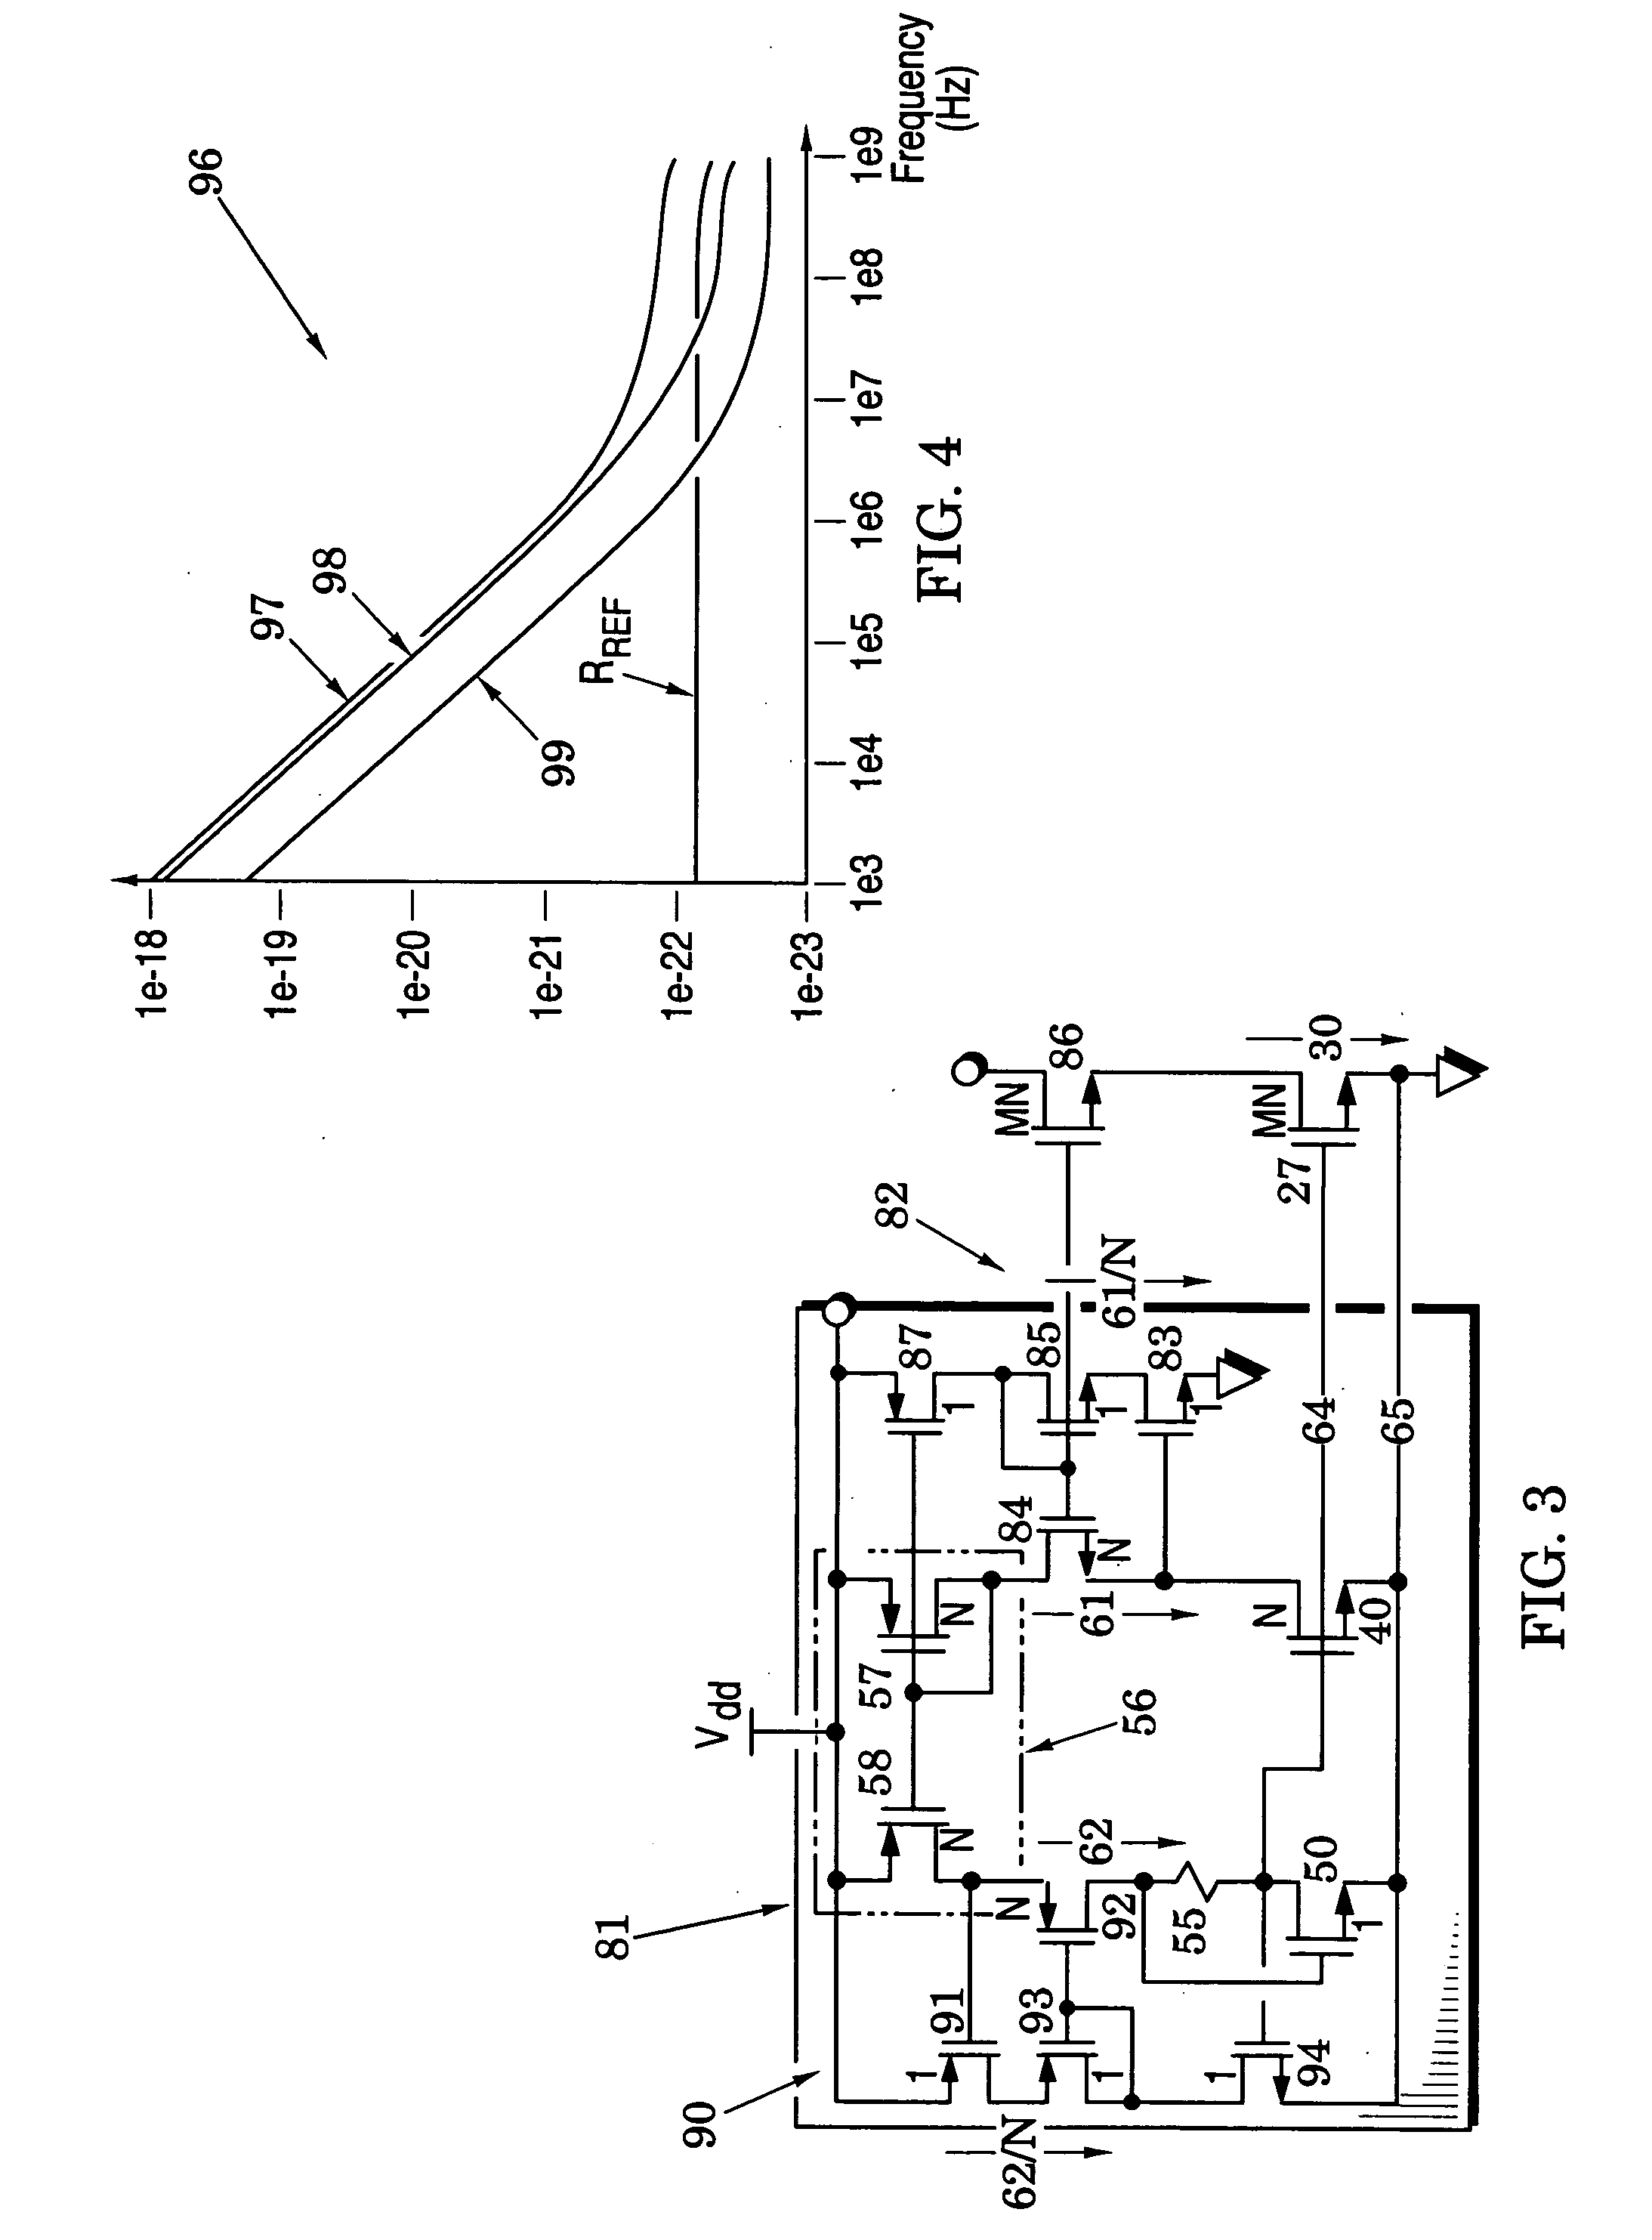 Amplifier systems with low-noise, constant-transconductance bias generators